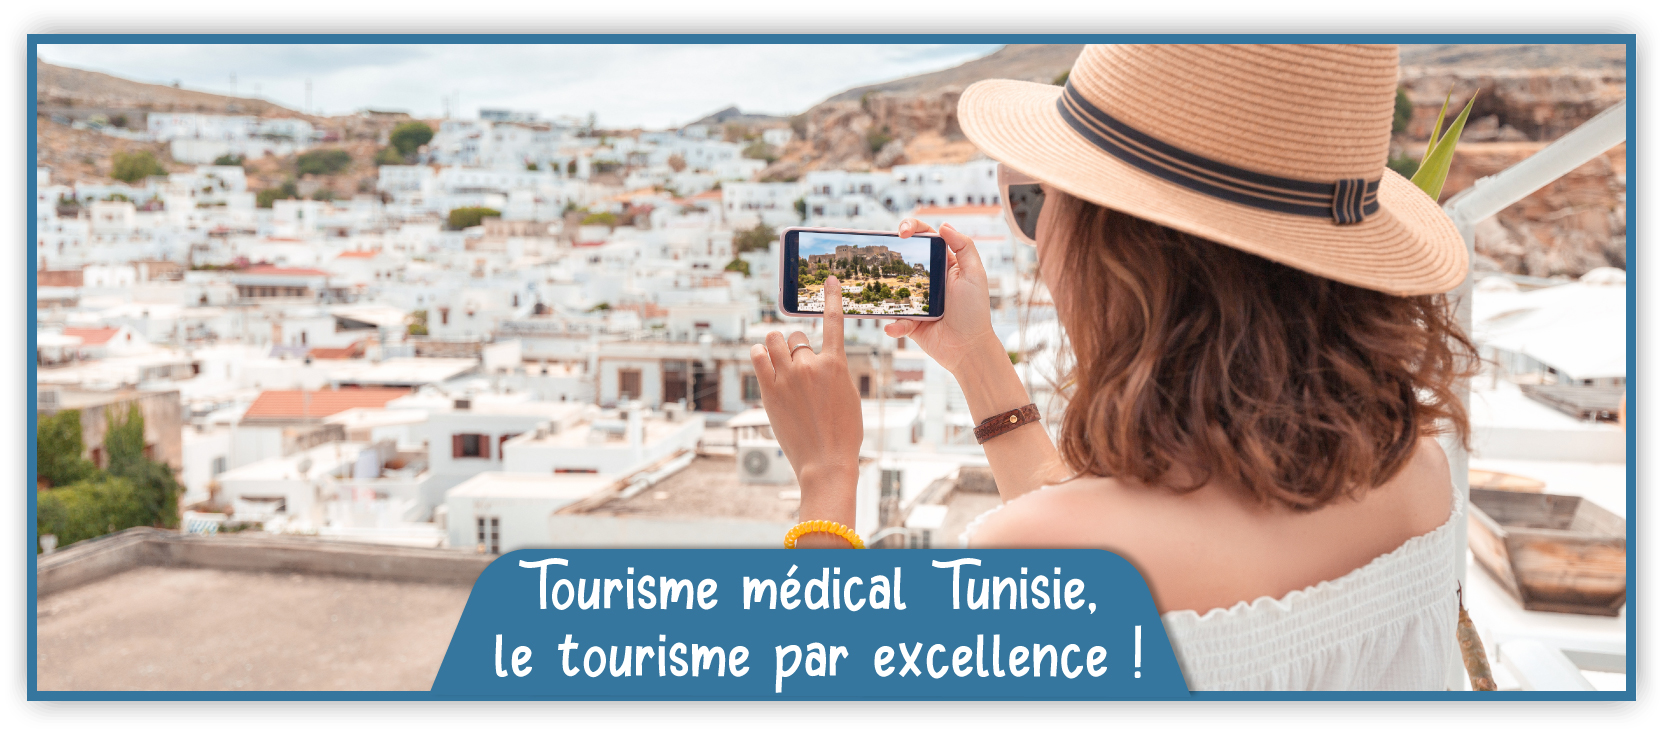 tourisme medical tunisie slide 2